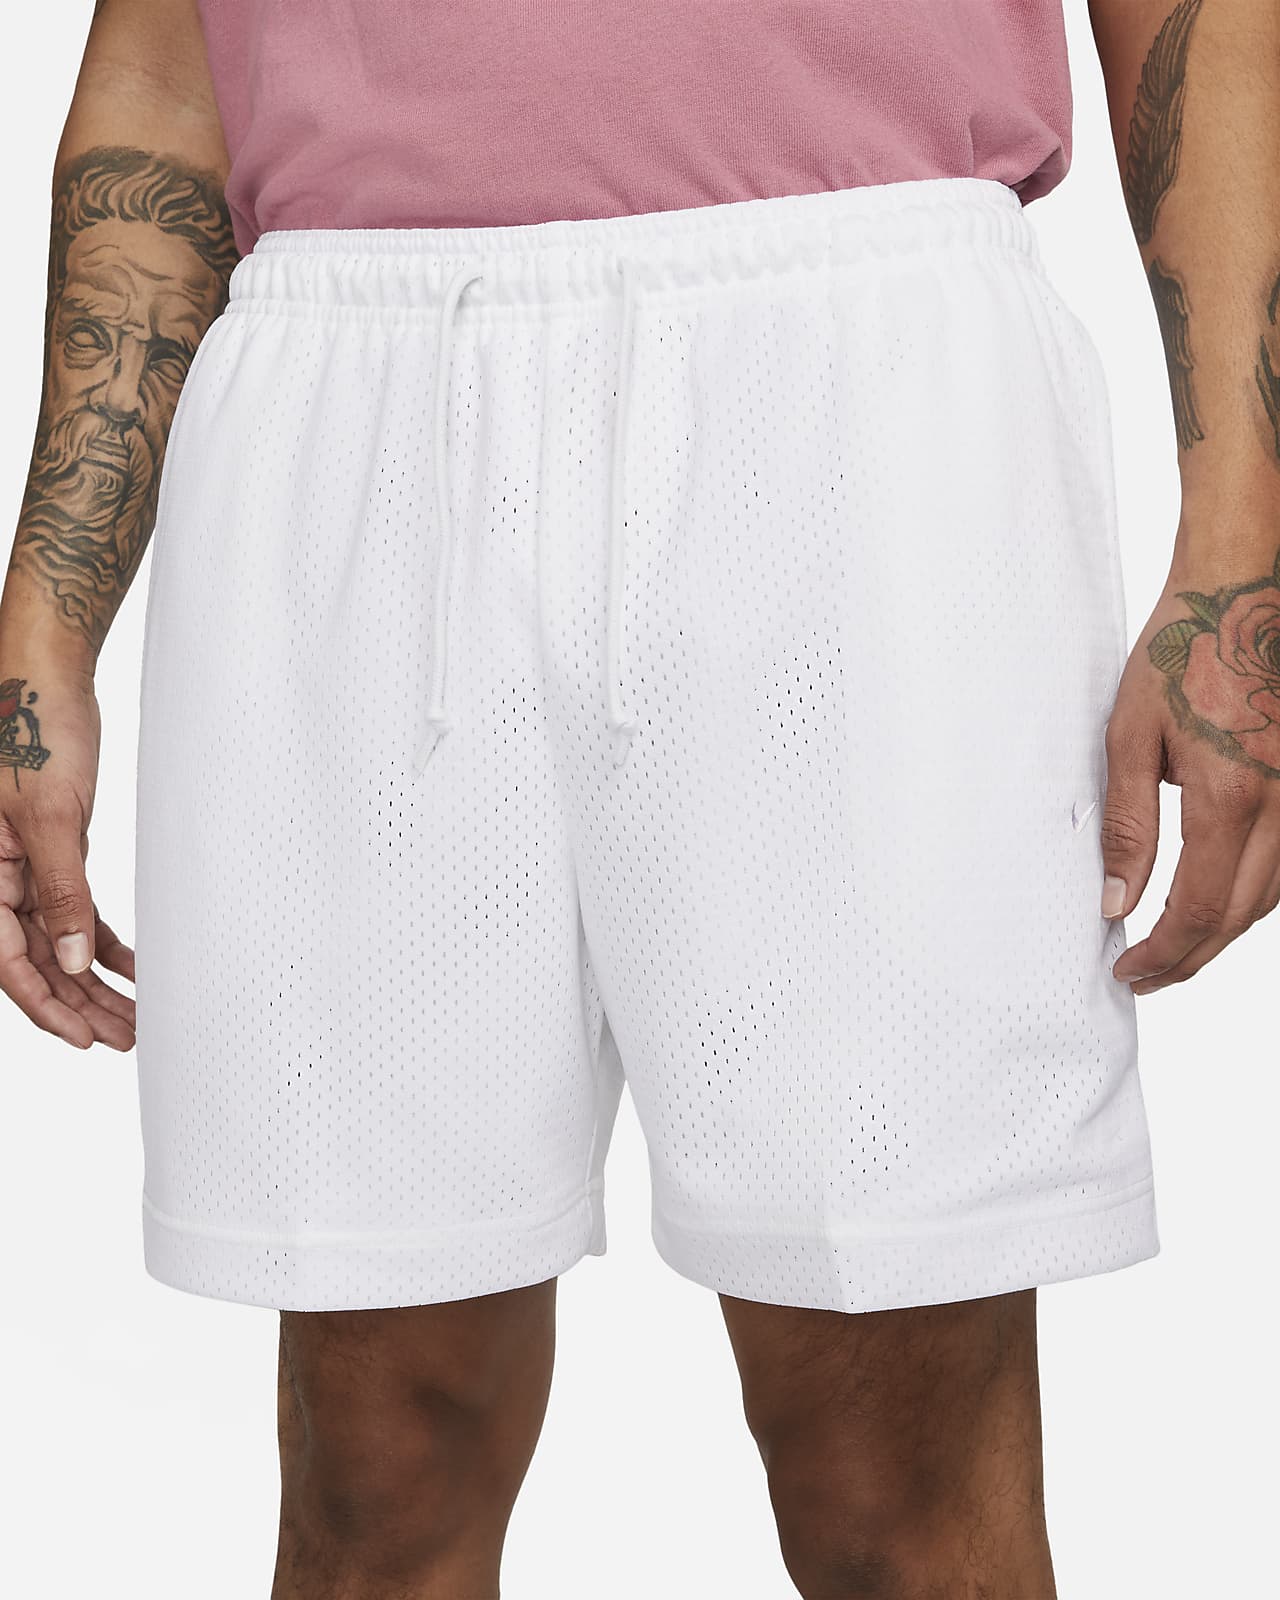 Nike Sportswear Authentics Men's Mesh Shorts.